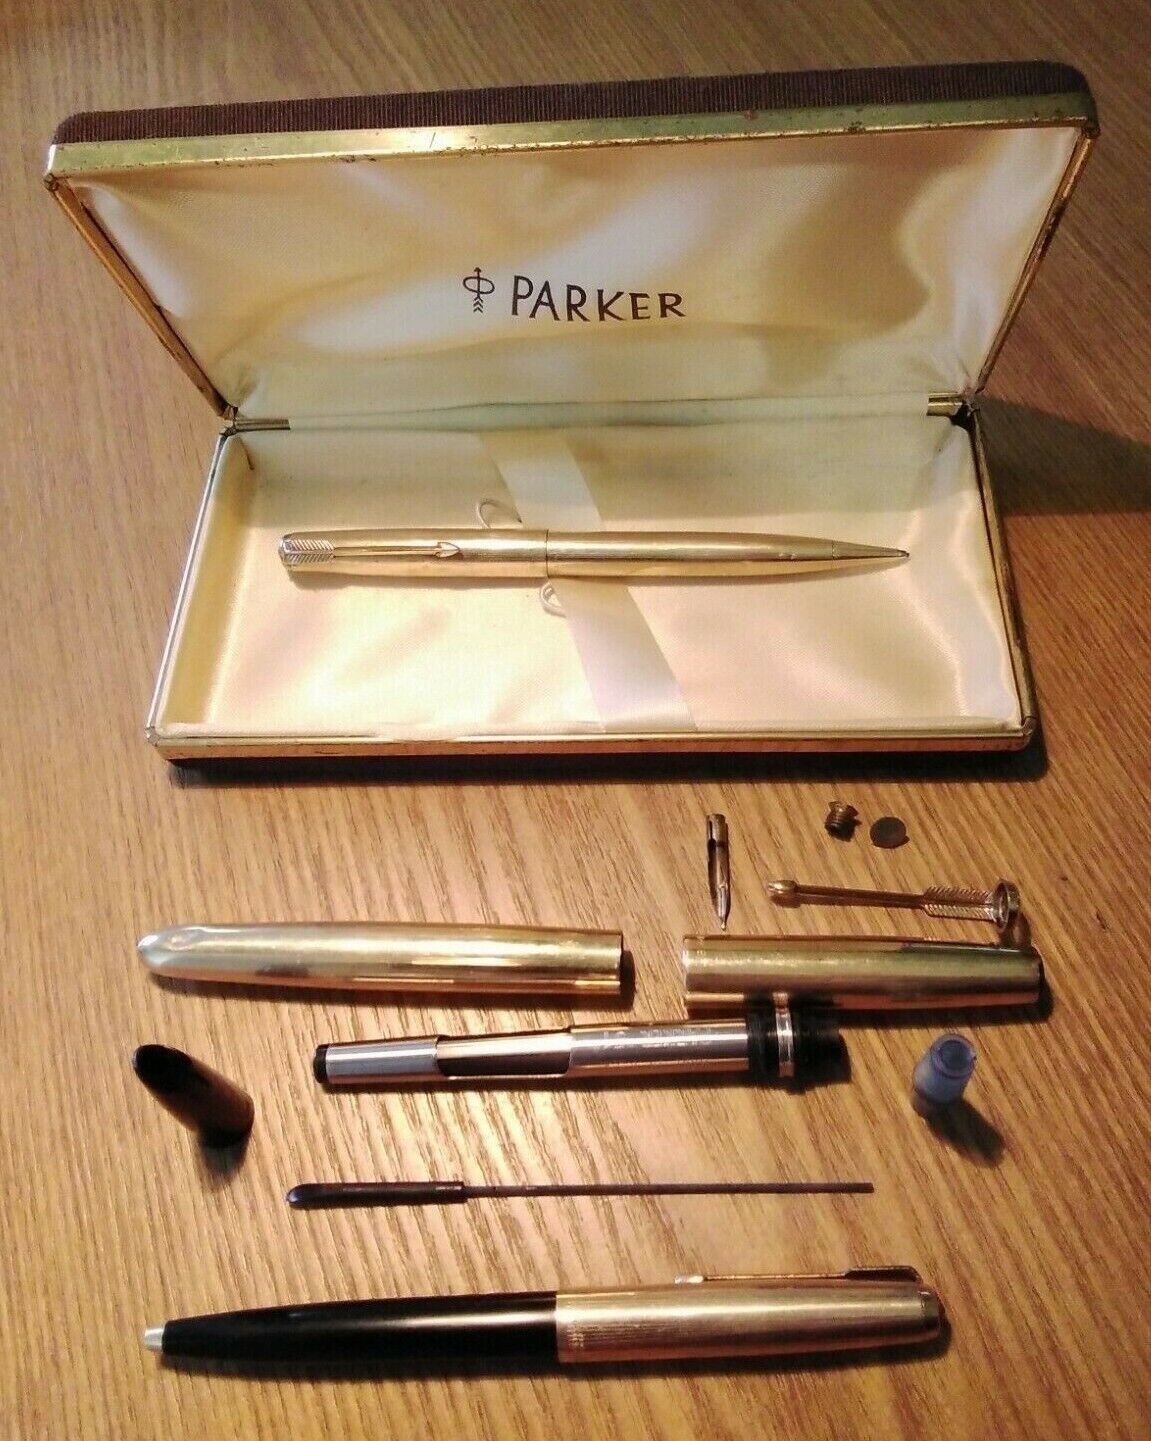 Parker 51 Aerometric 1/10 14k gold filled fountain pen + boligraph + pencil +box